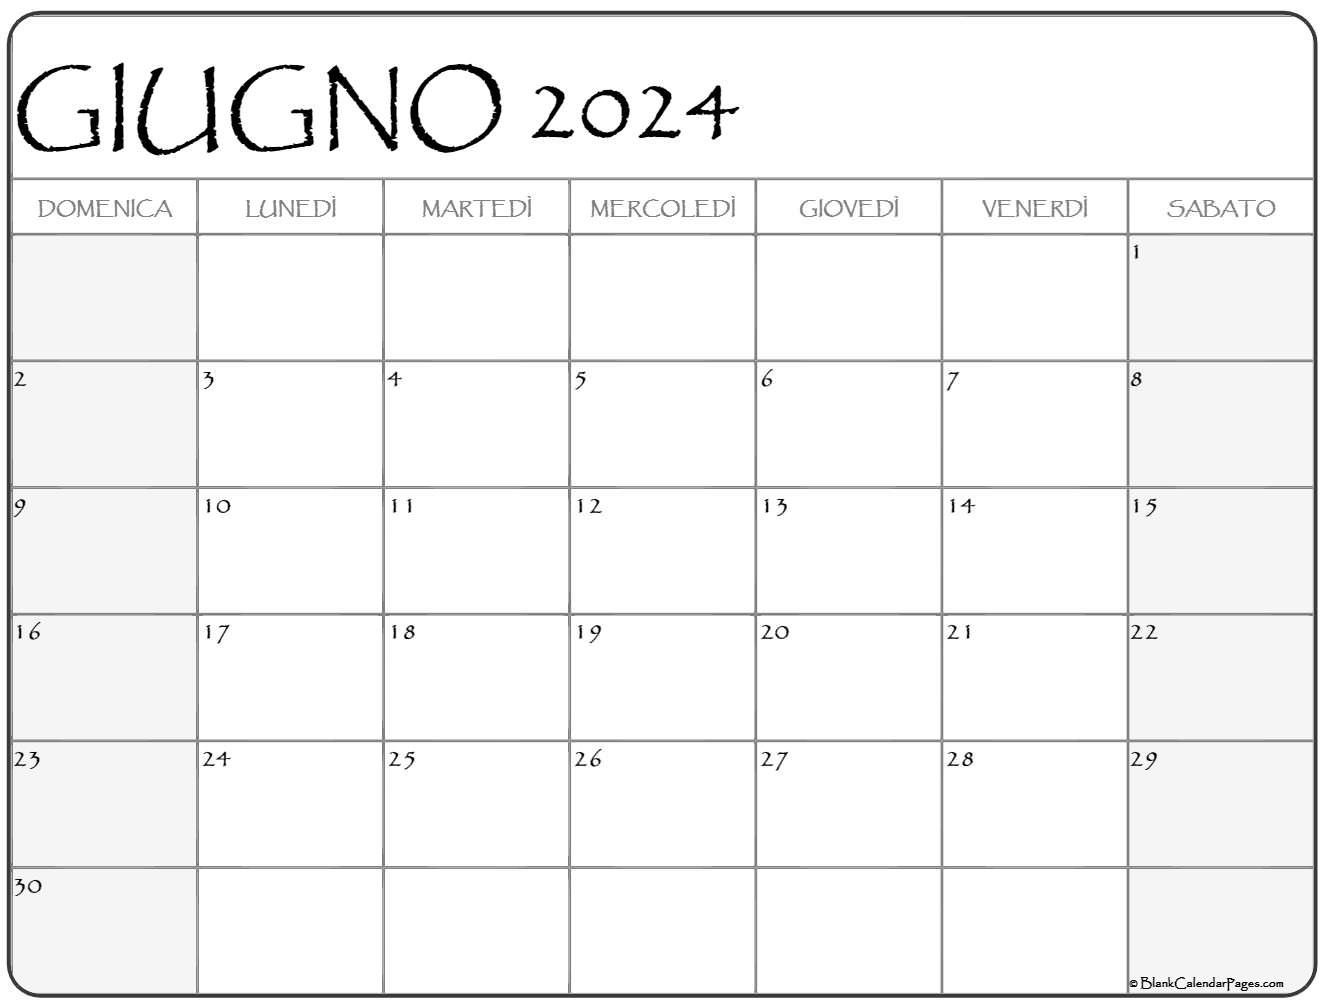 giugno 2024 calendario gratis italiano Calendario giugno